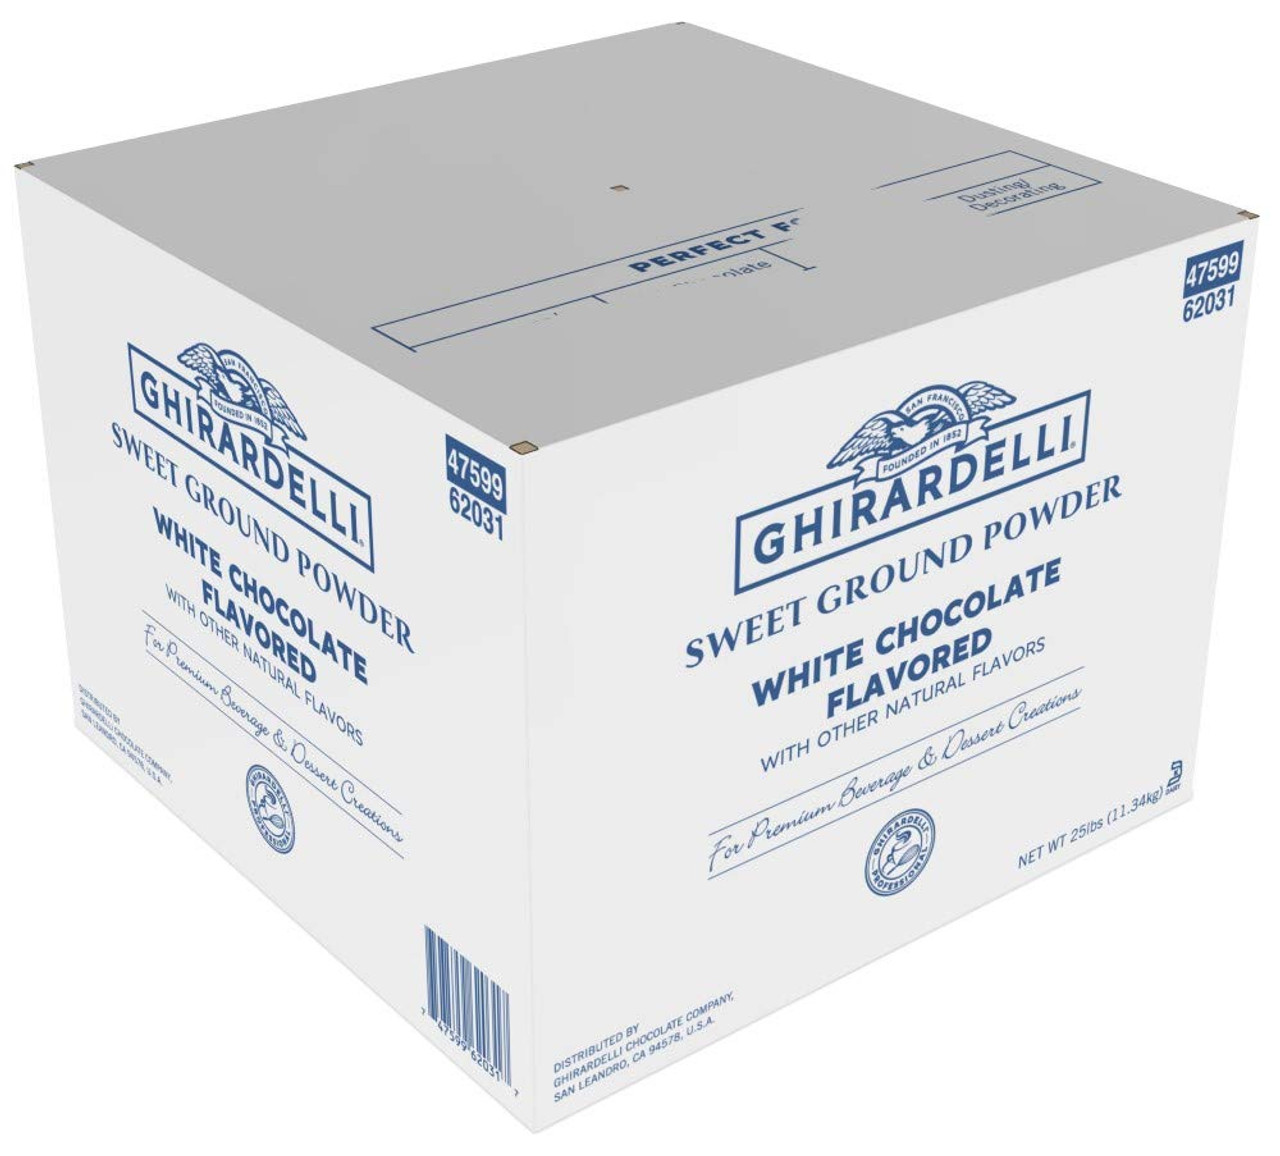 Ghirardelli 25 lb. Sweet Ground White Chocolate Flavored Powder